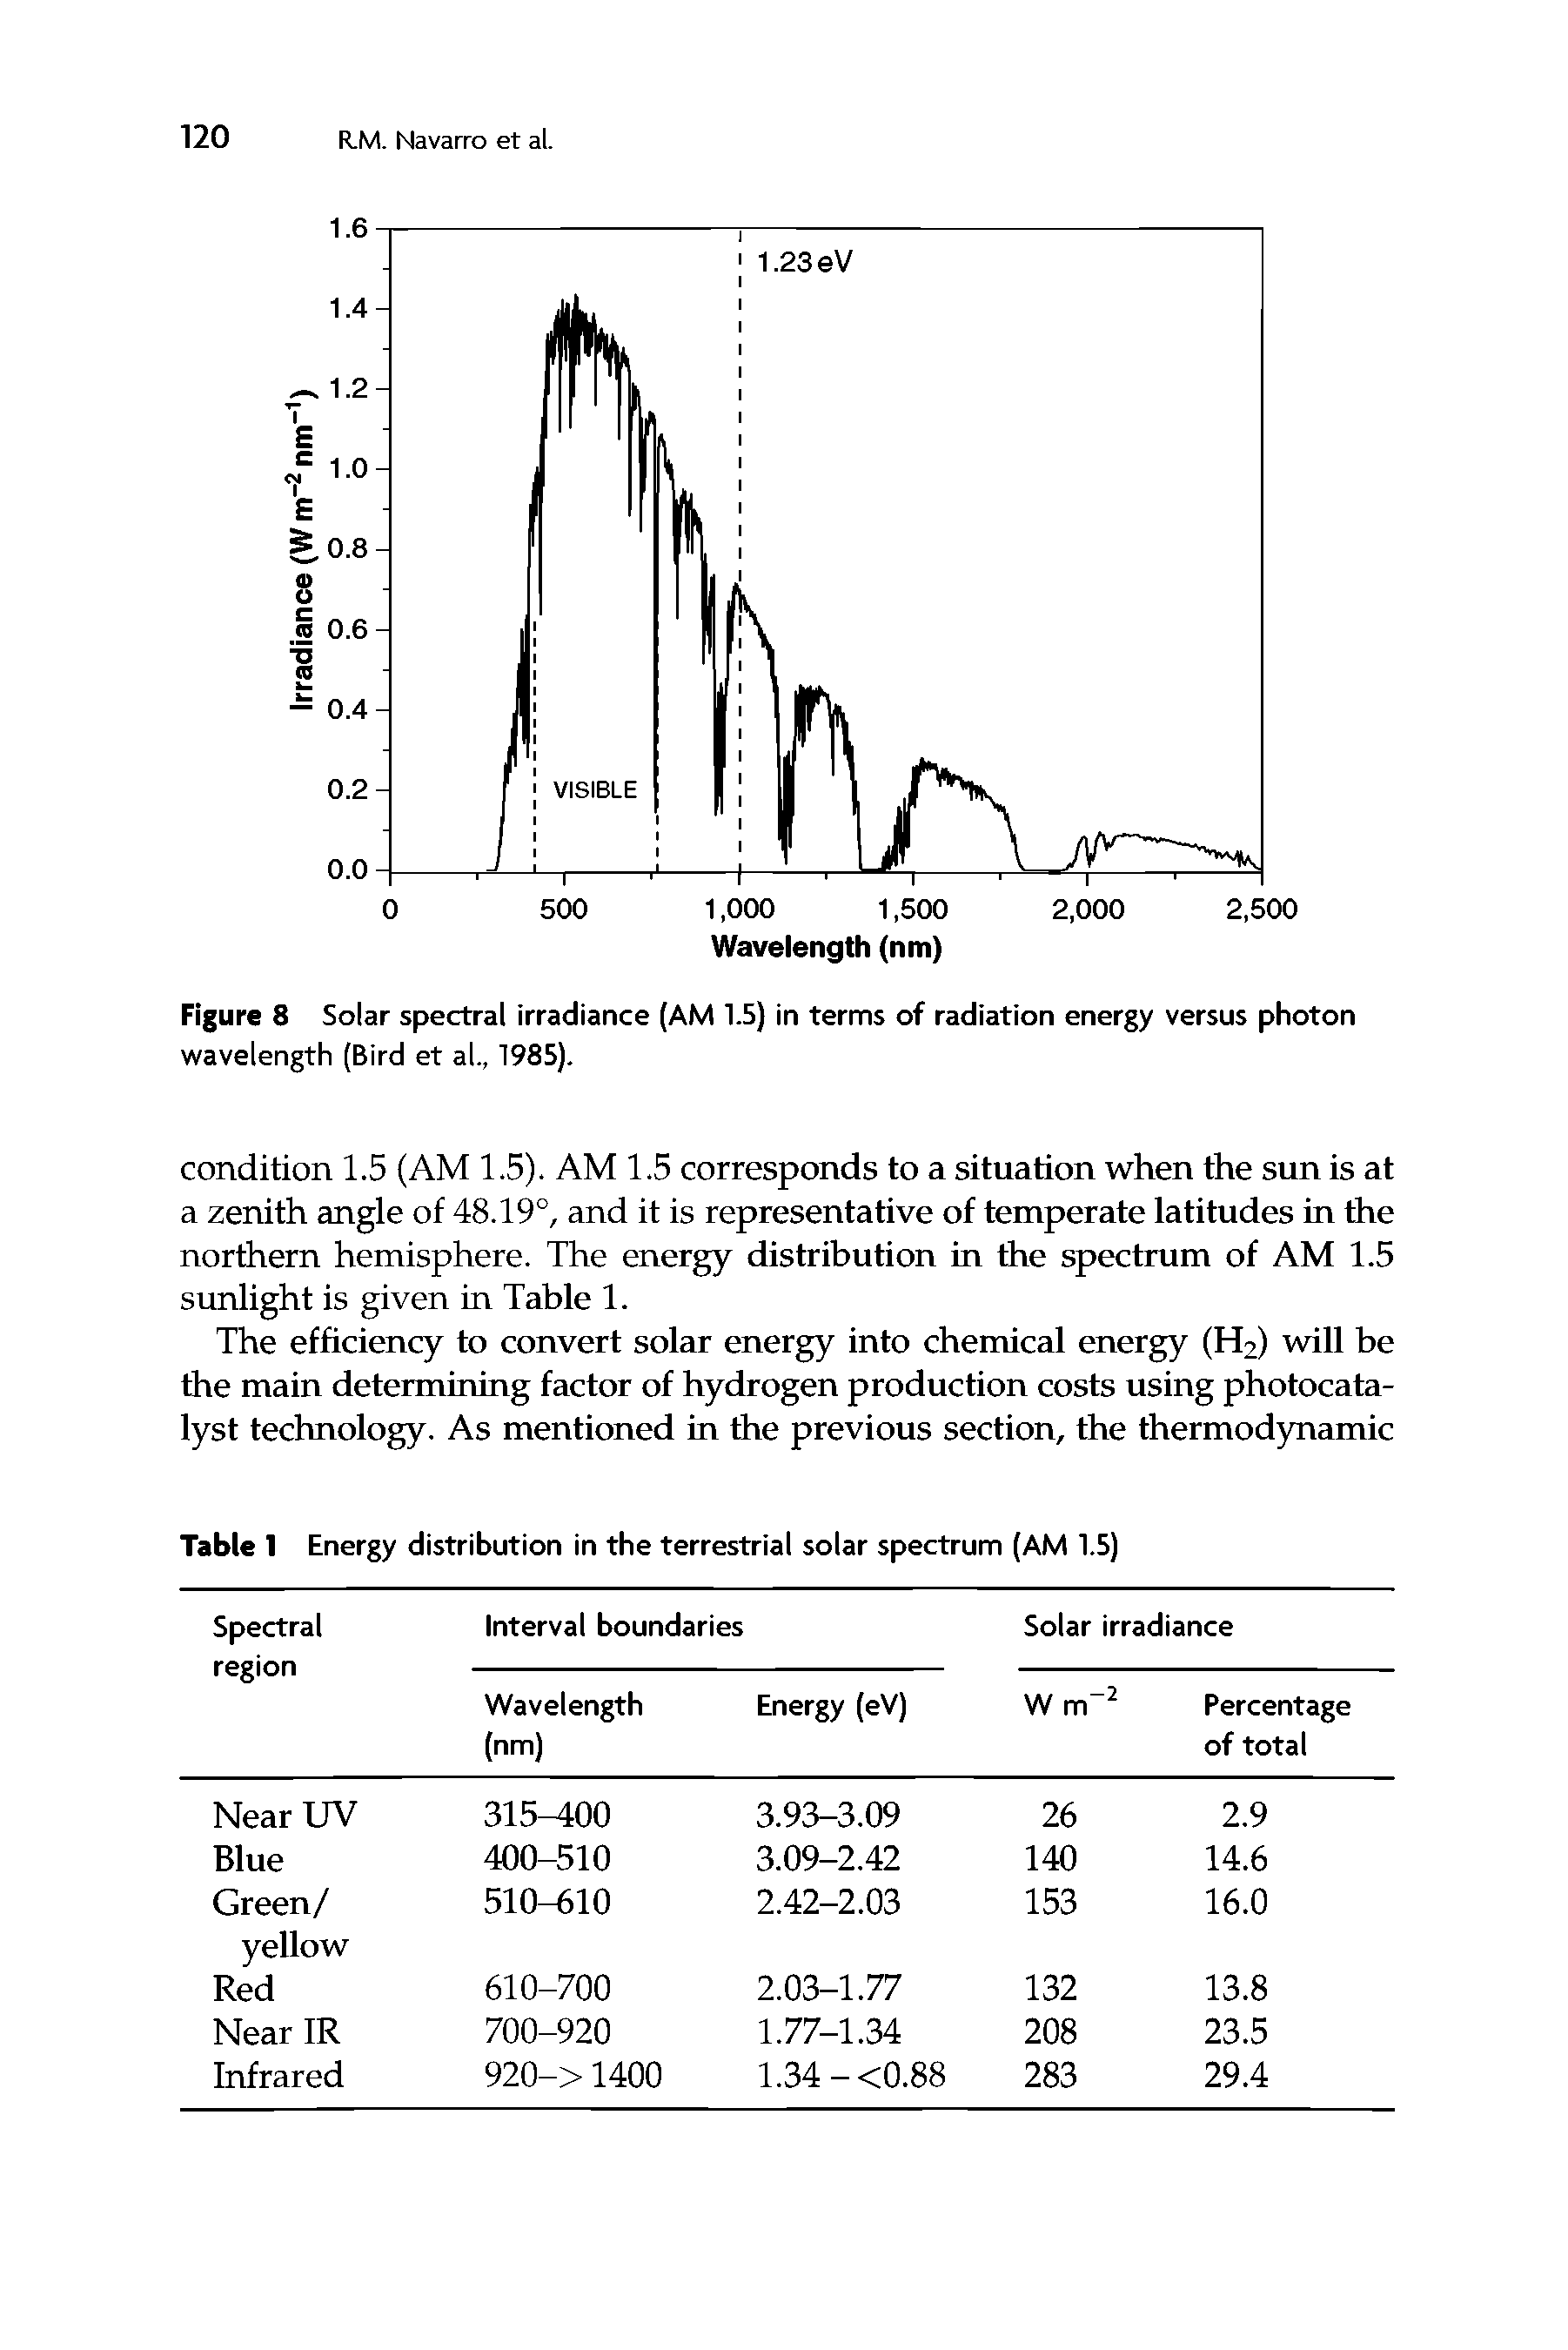 Figure 8 Solar spectral irradiance (AM 1.5) in terms of radiation energy versus photon wavelength (Bird et al., 1985).